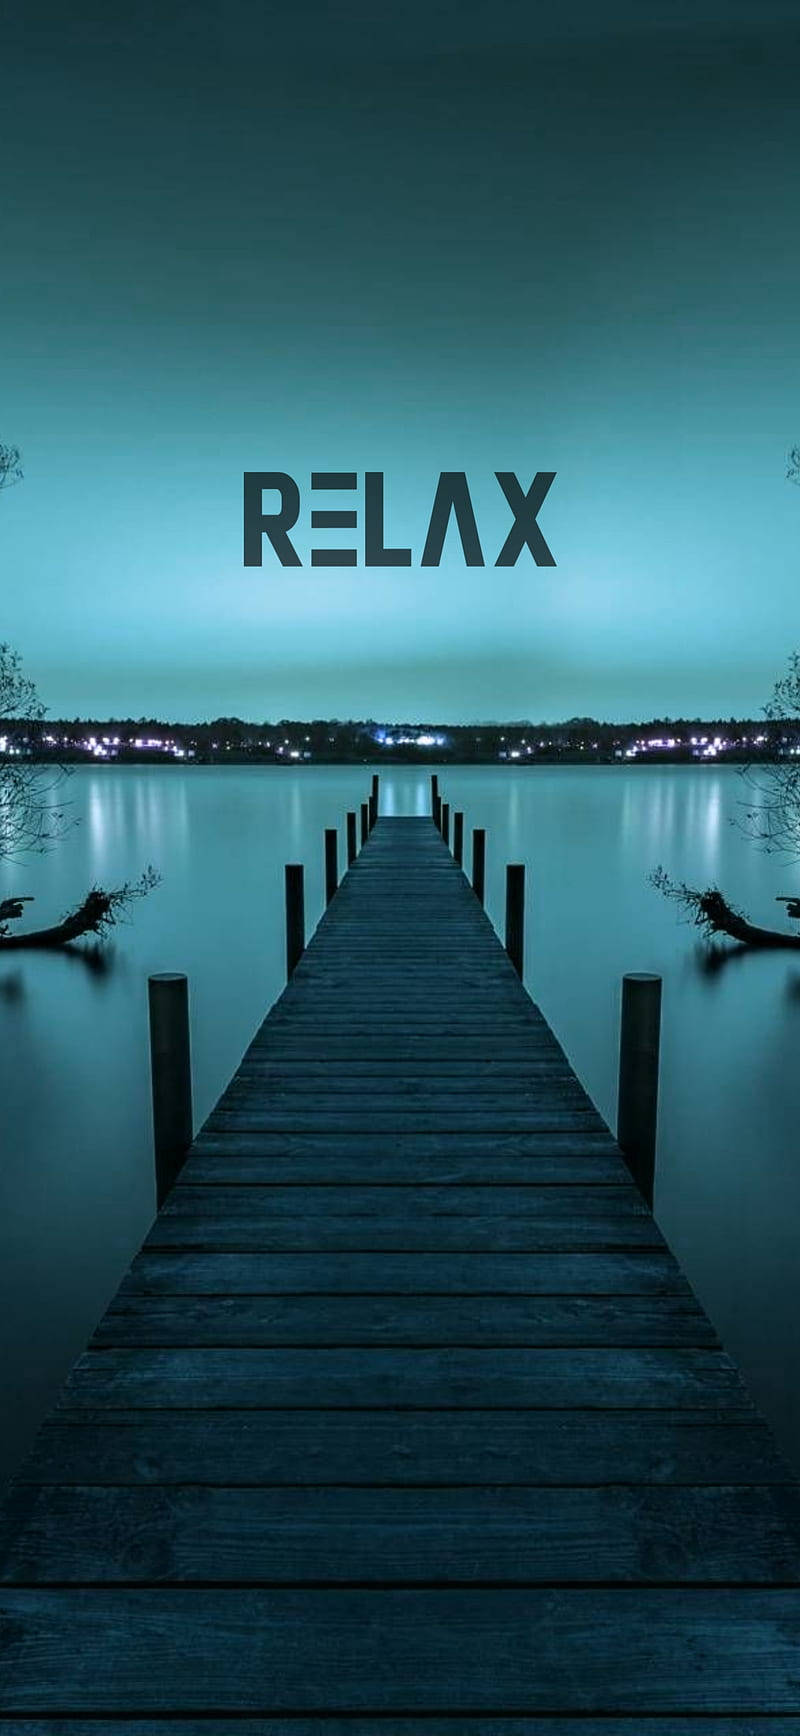 Relax Pier Motivational Mobile